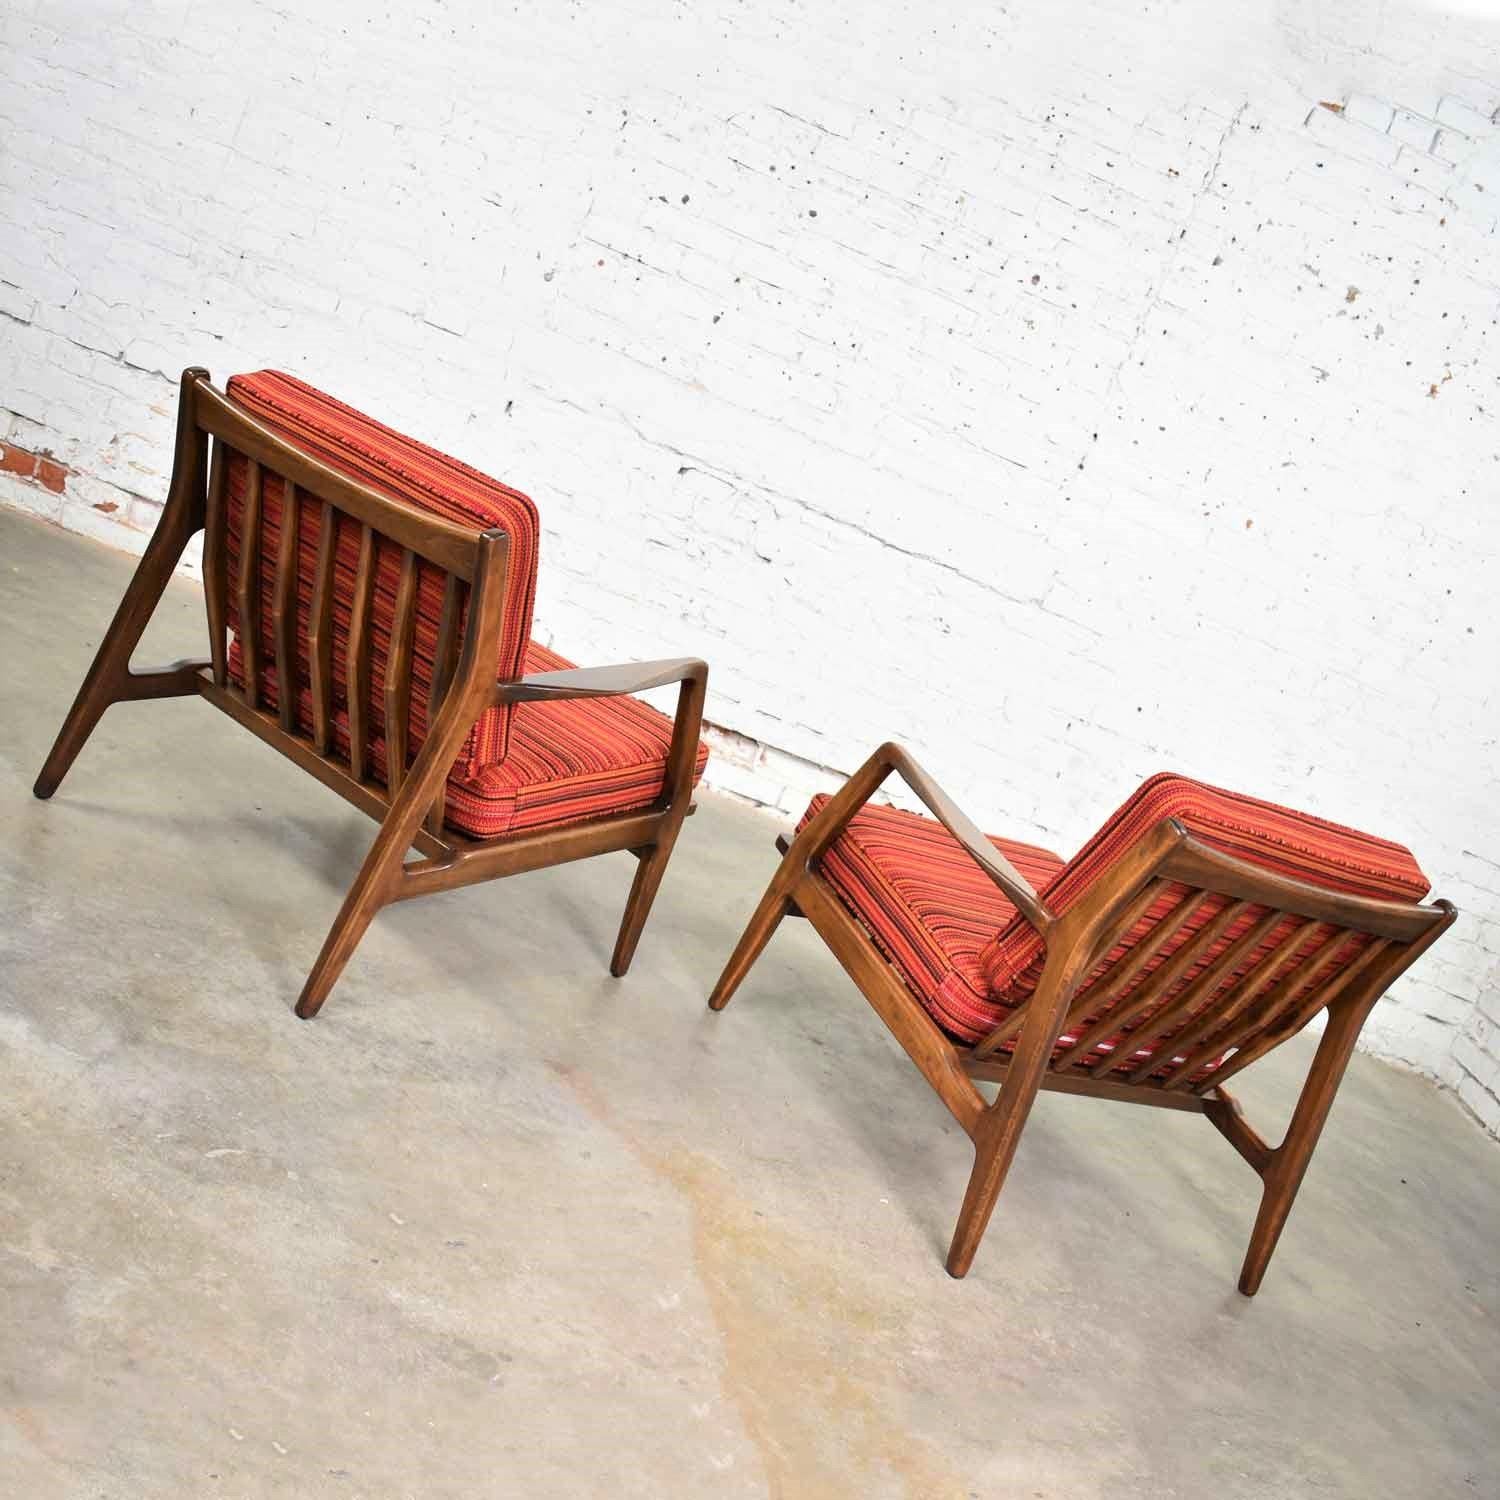 20th Century Scandinavian Modern Ib Kofod-Larsen Lounge Chairs for Selig in Red Stripe Fabric